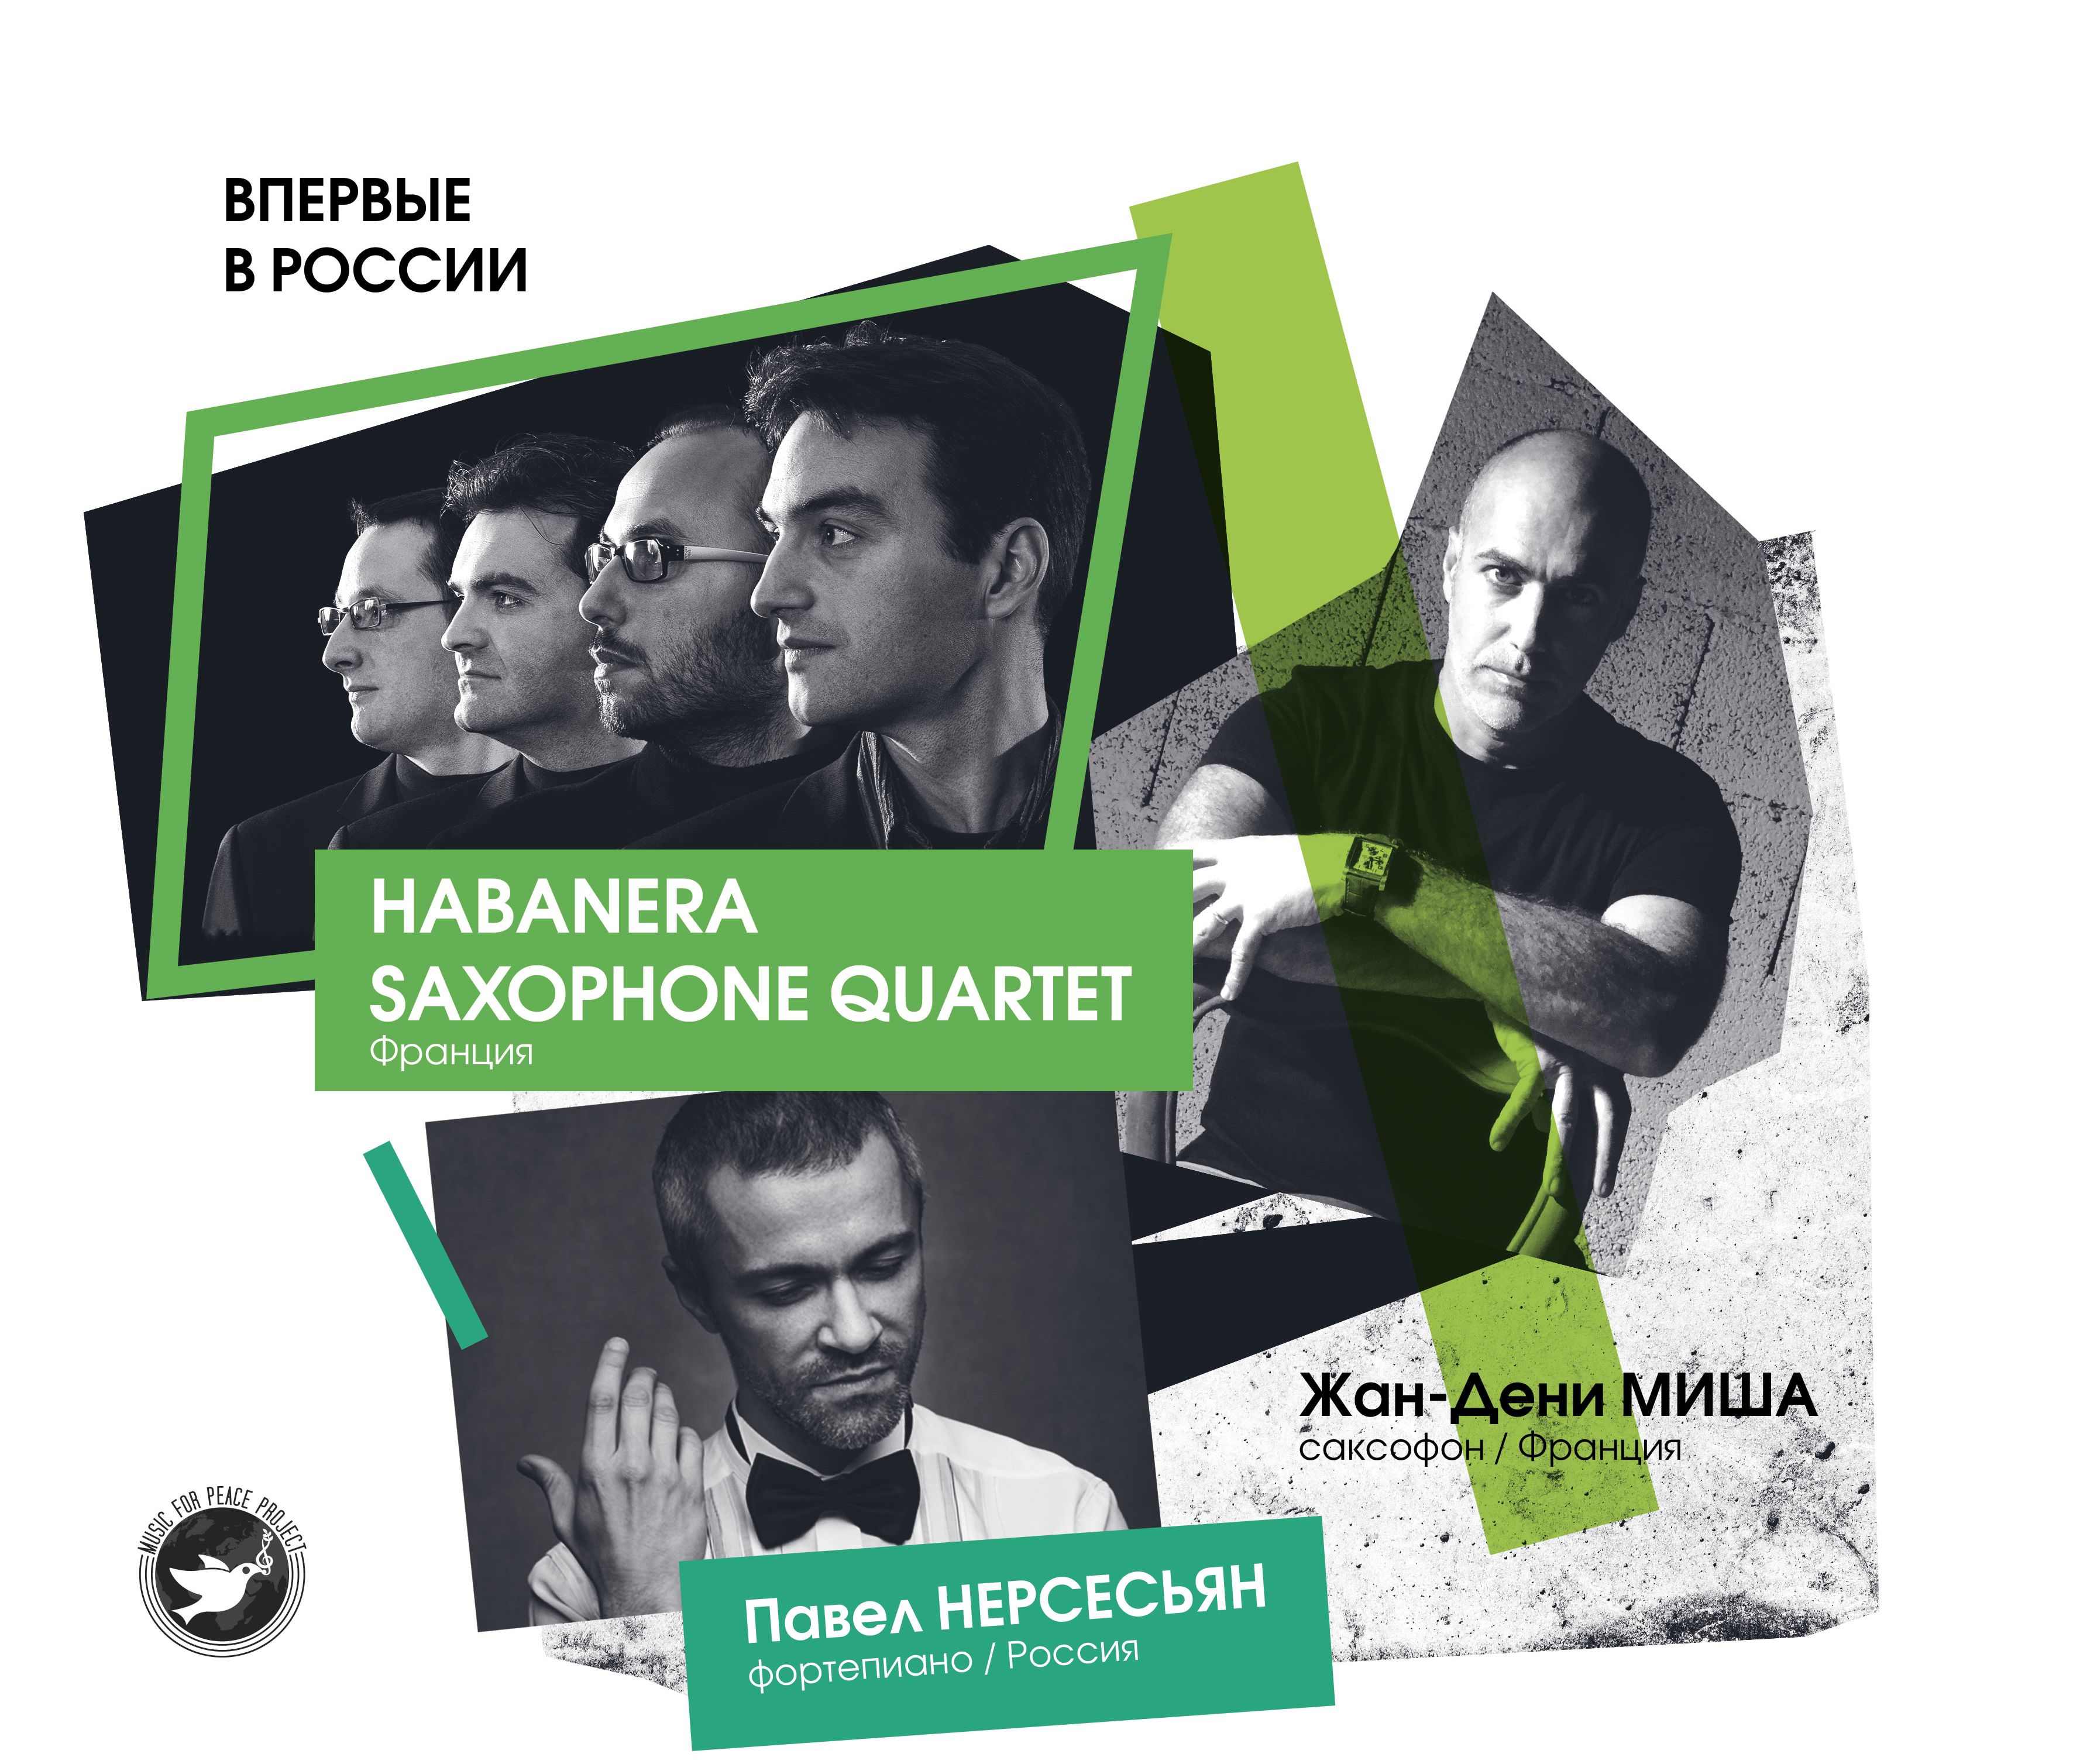 Concert Habanera Saxophone Quartet in Moscow